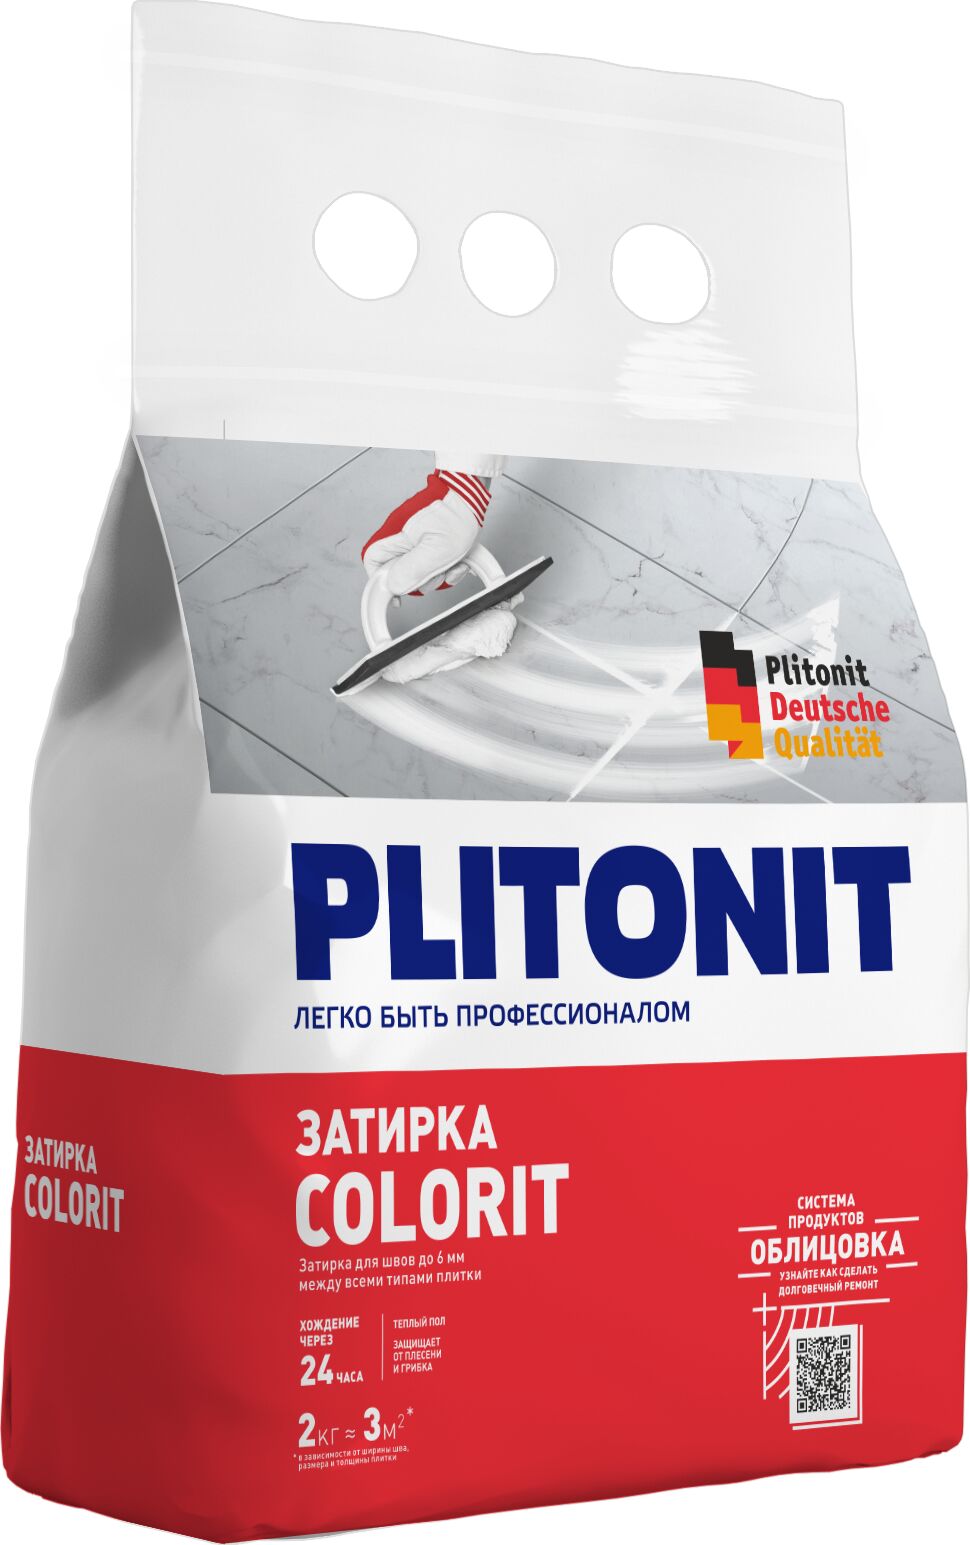 PLITONIT Colorit затирка между всеми типами плитки (1,5-6 мм) САЛАТОВАЯ -2 , PLITONIT Colorit затирка между всеми типами плитки (1,5-6 мм) салатовая -2 